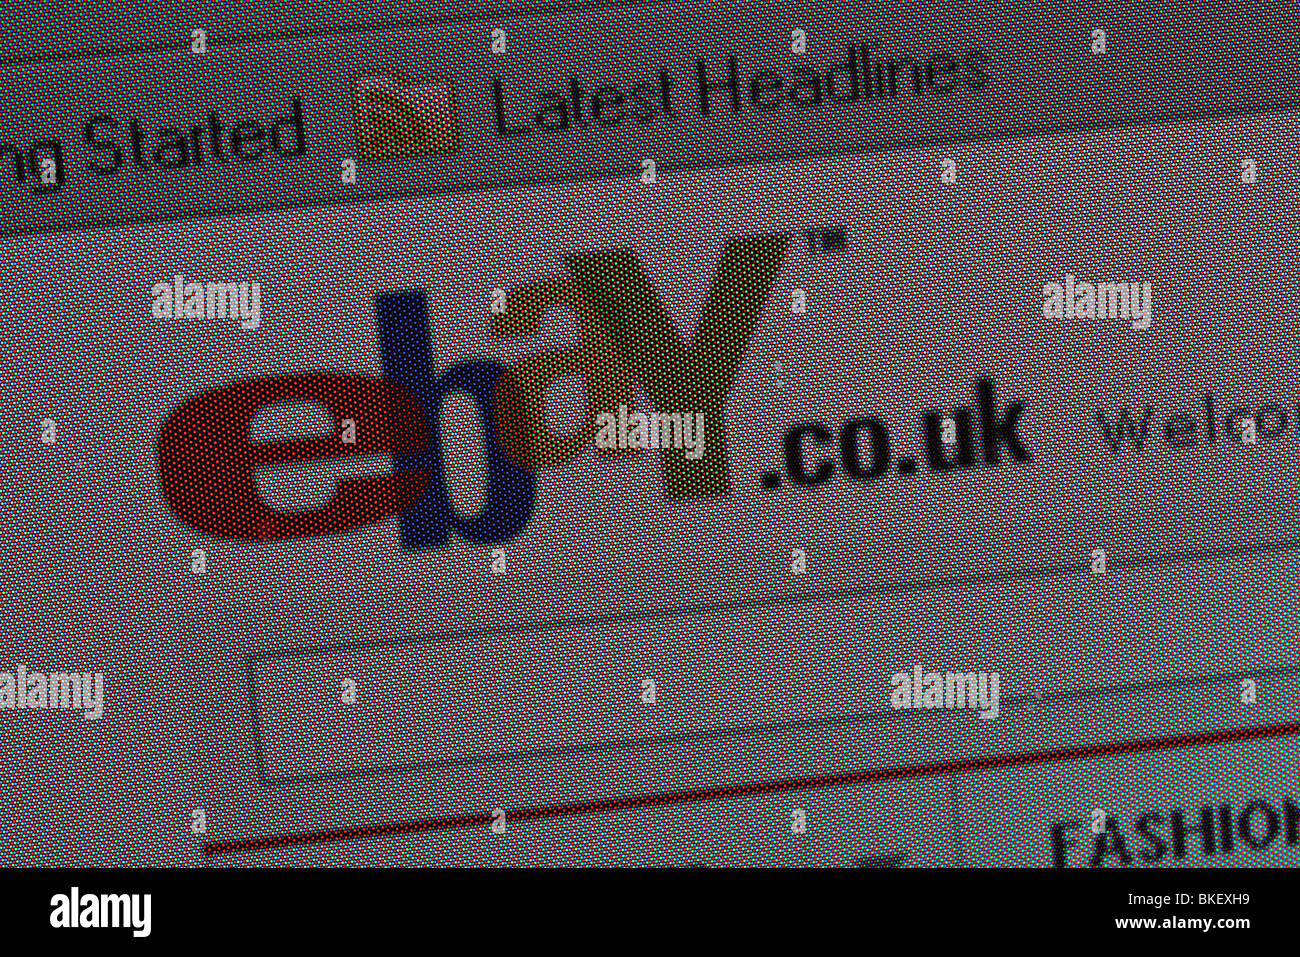 Ebay.co.uk website - editorial use only Stock Photo - Alamy